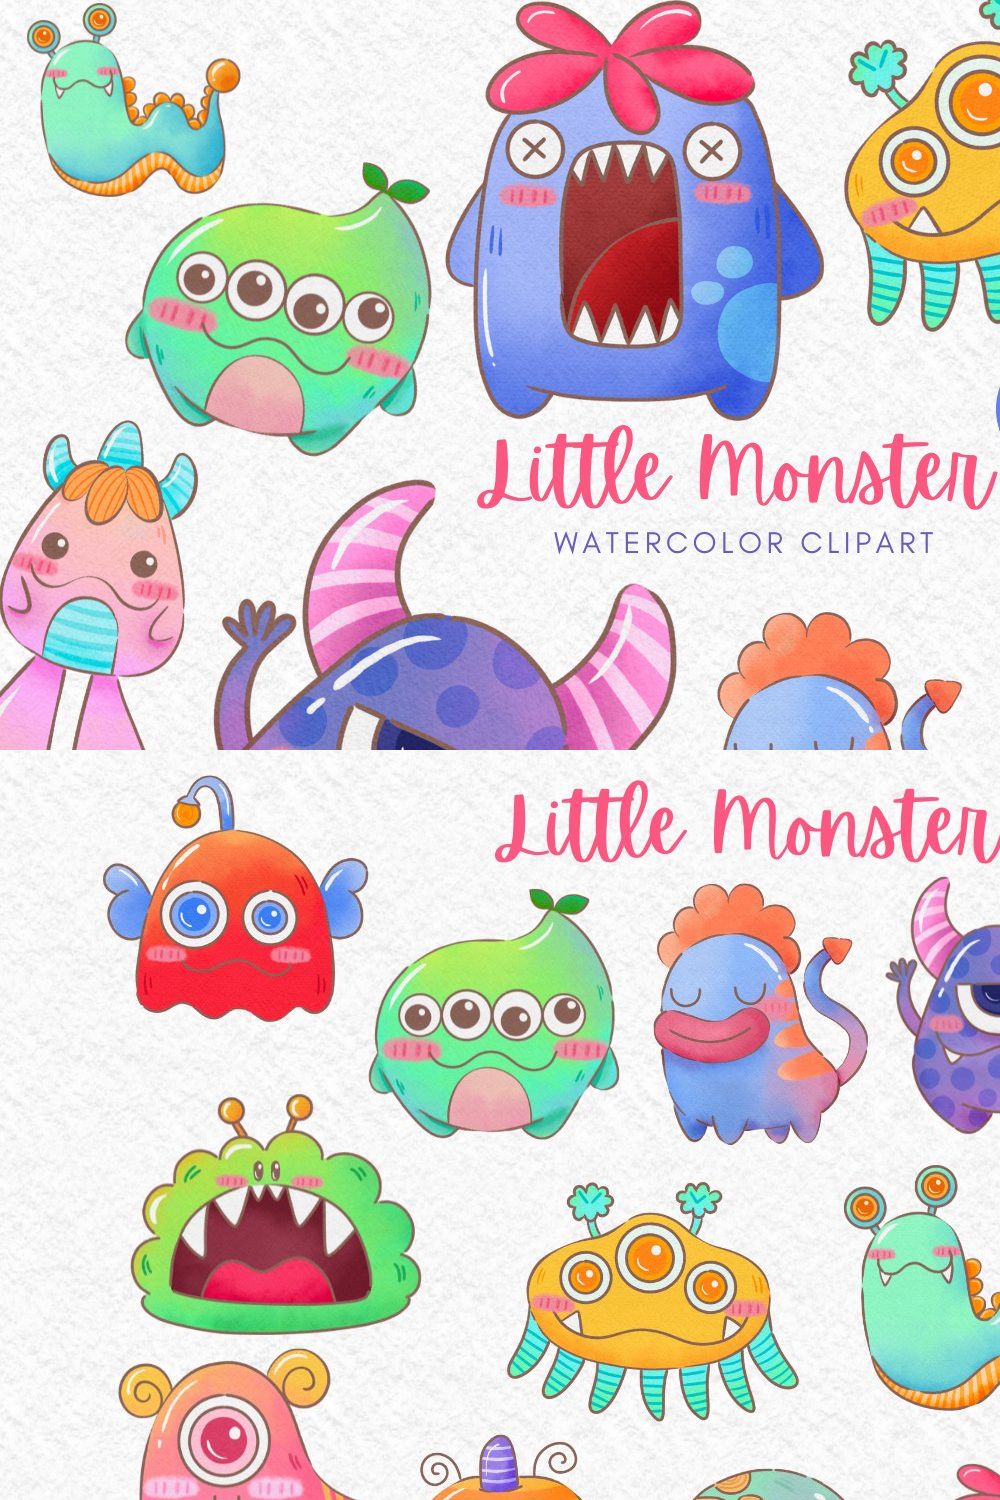 Little Monster watercolor clipart pinterest preview image.